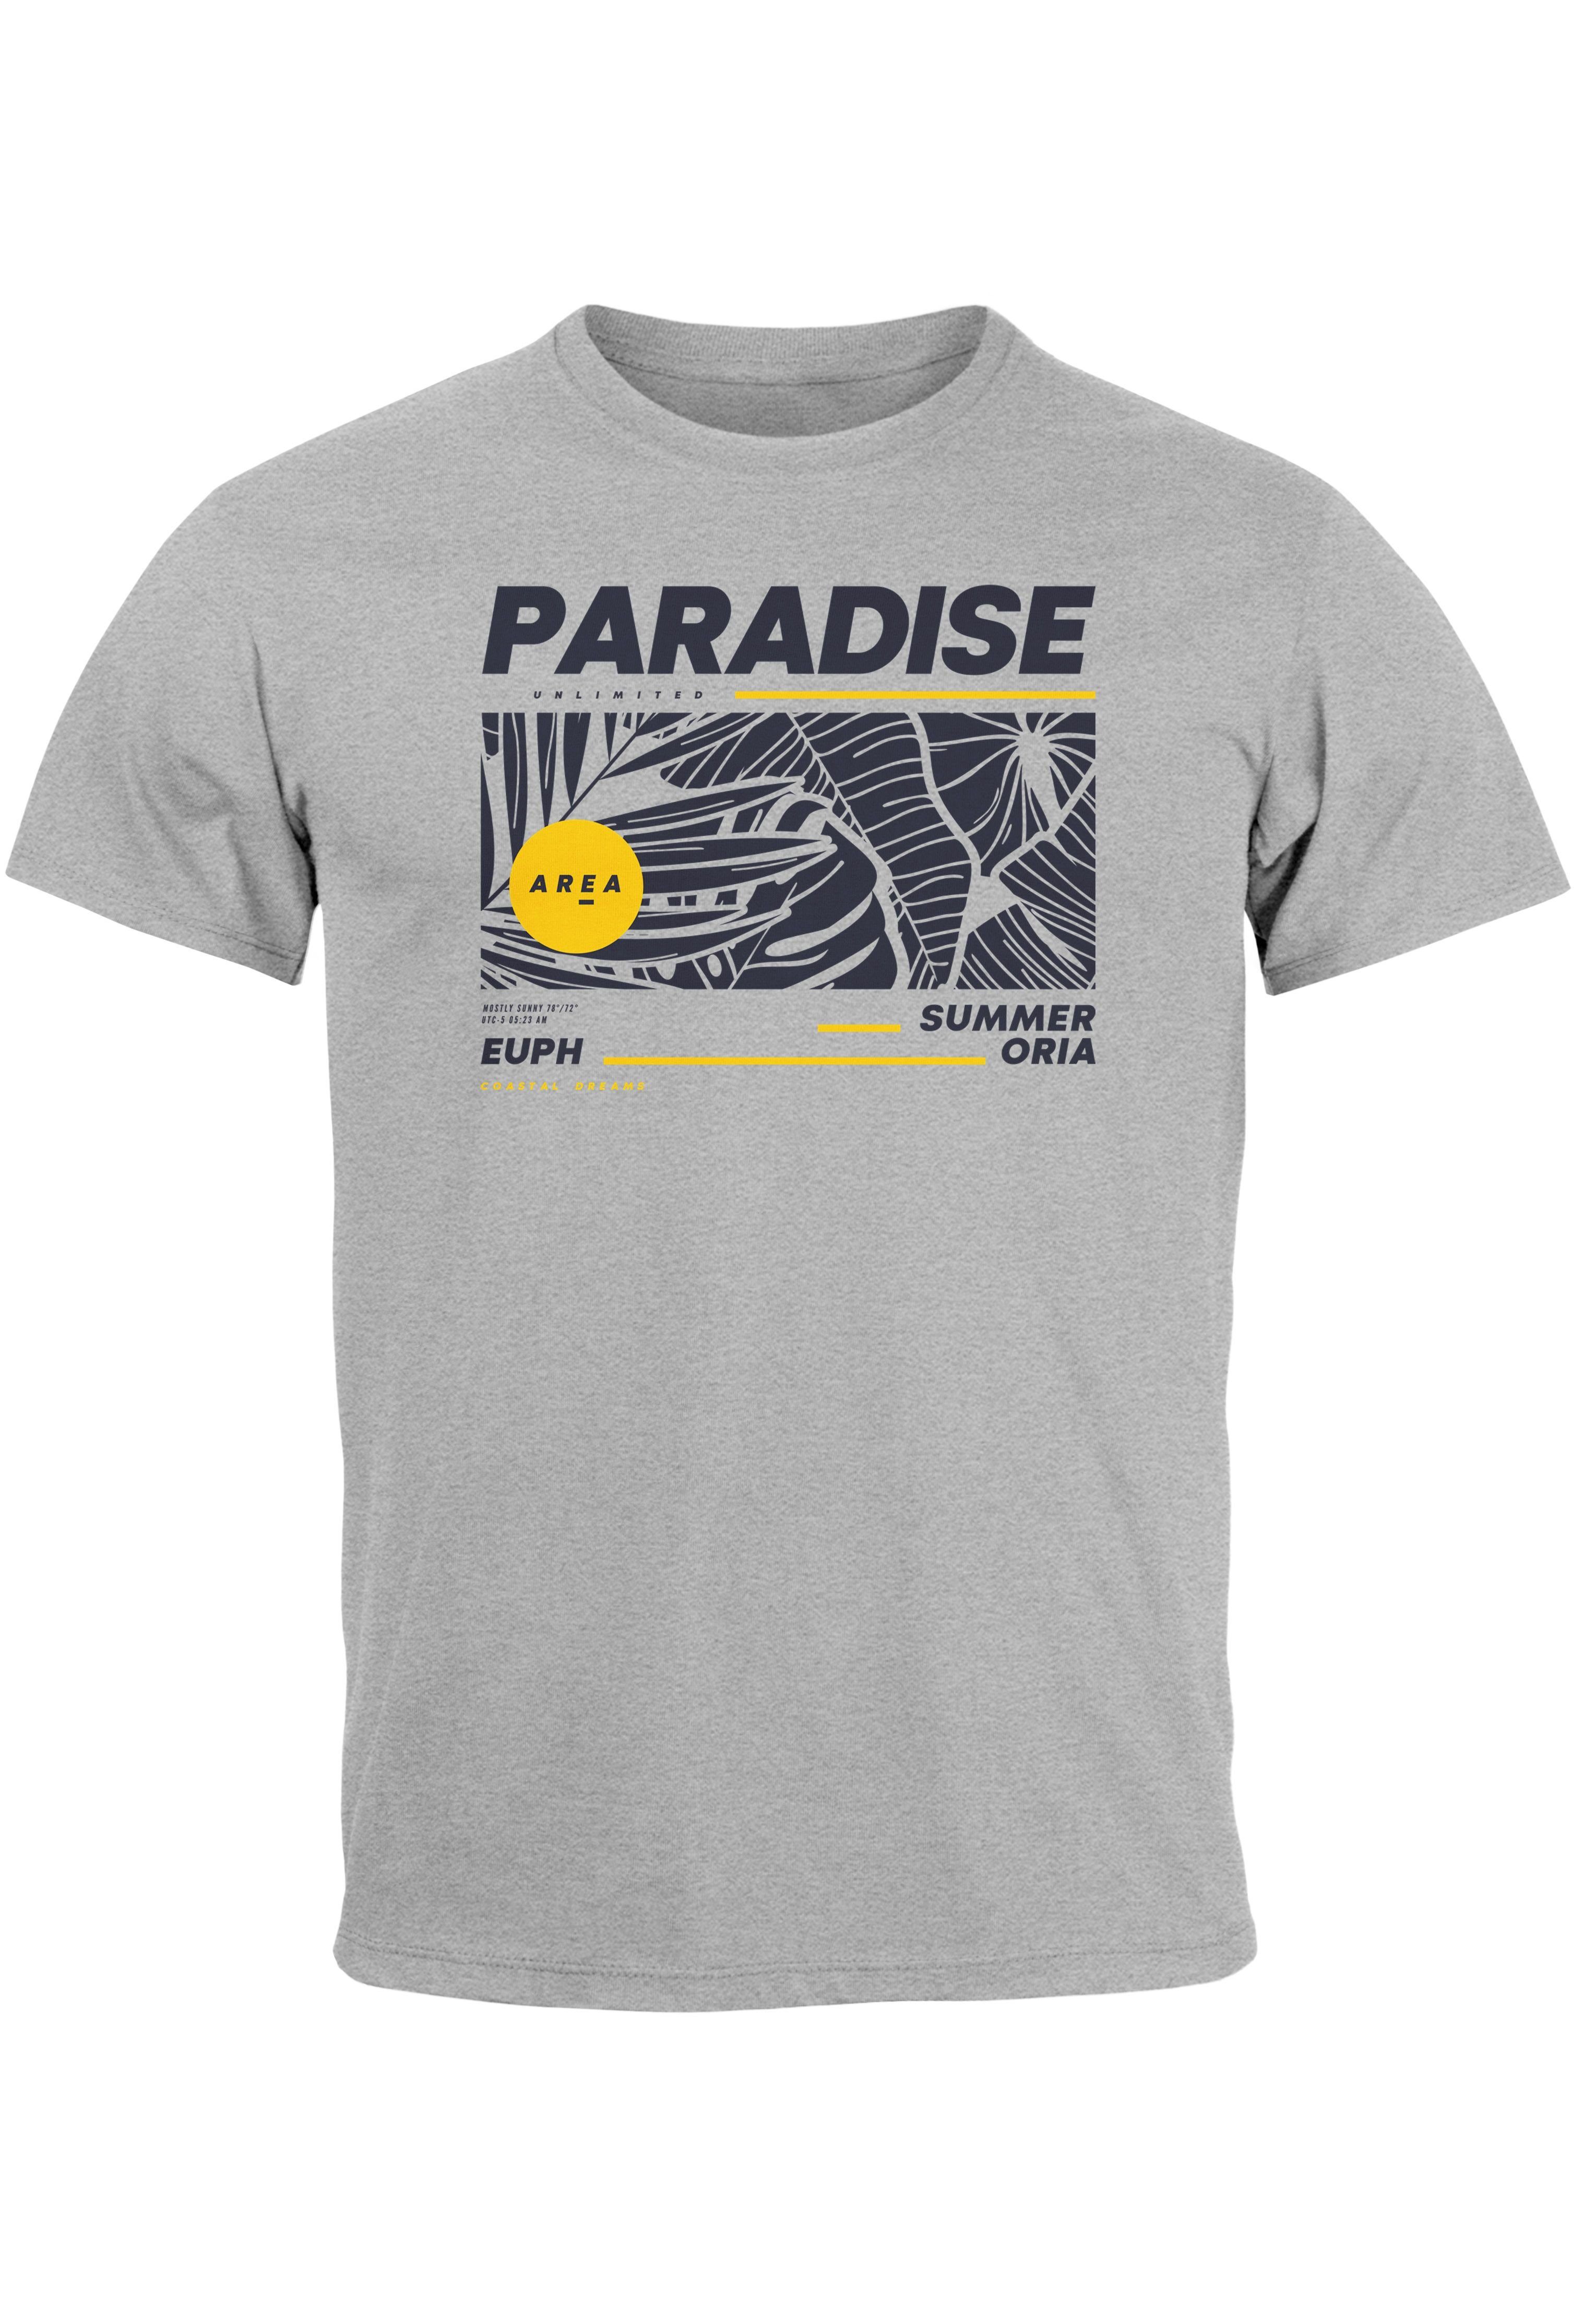 Herren Unlimited Neverless Motiv grau Teachwear Aufdruck T-Shirt mit Print Print-Shirt Fash Sommer Paradise